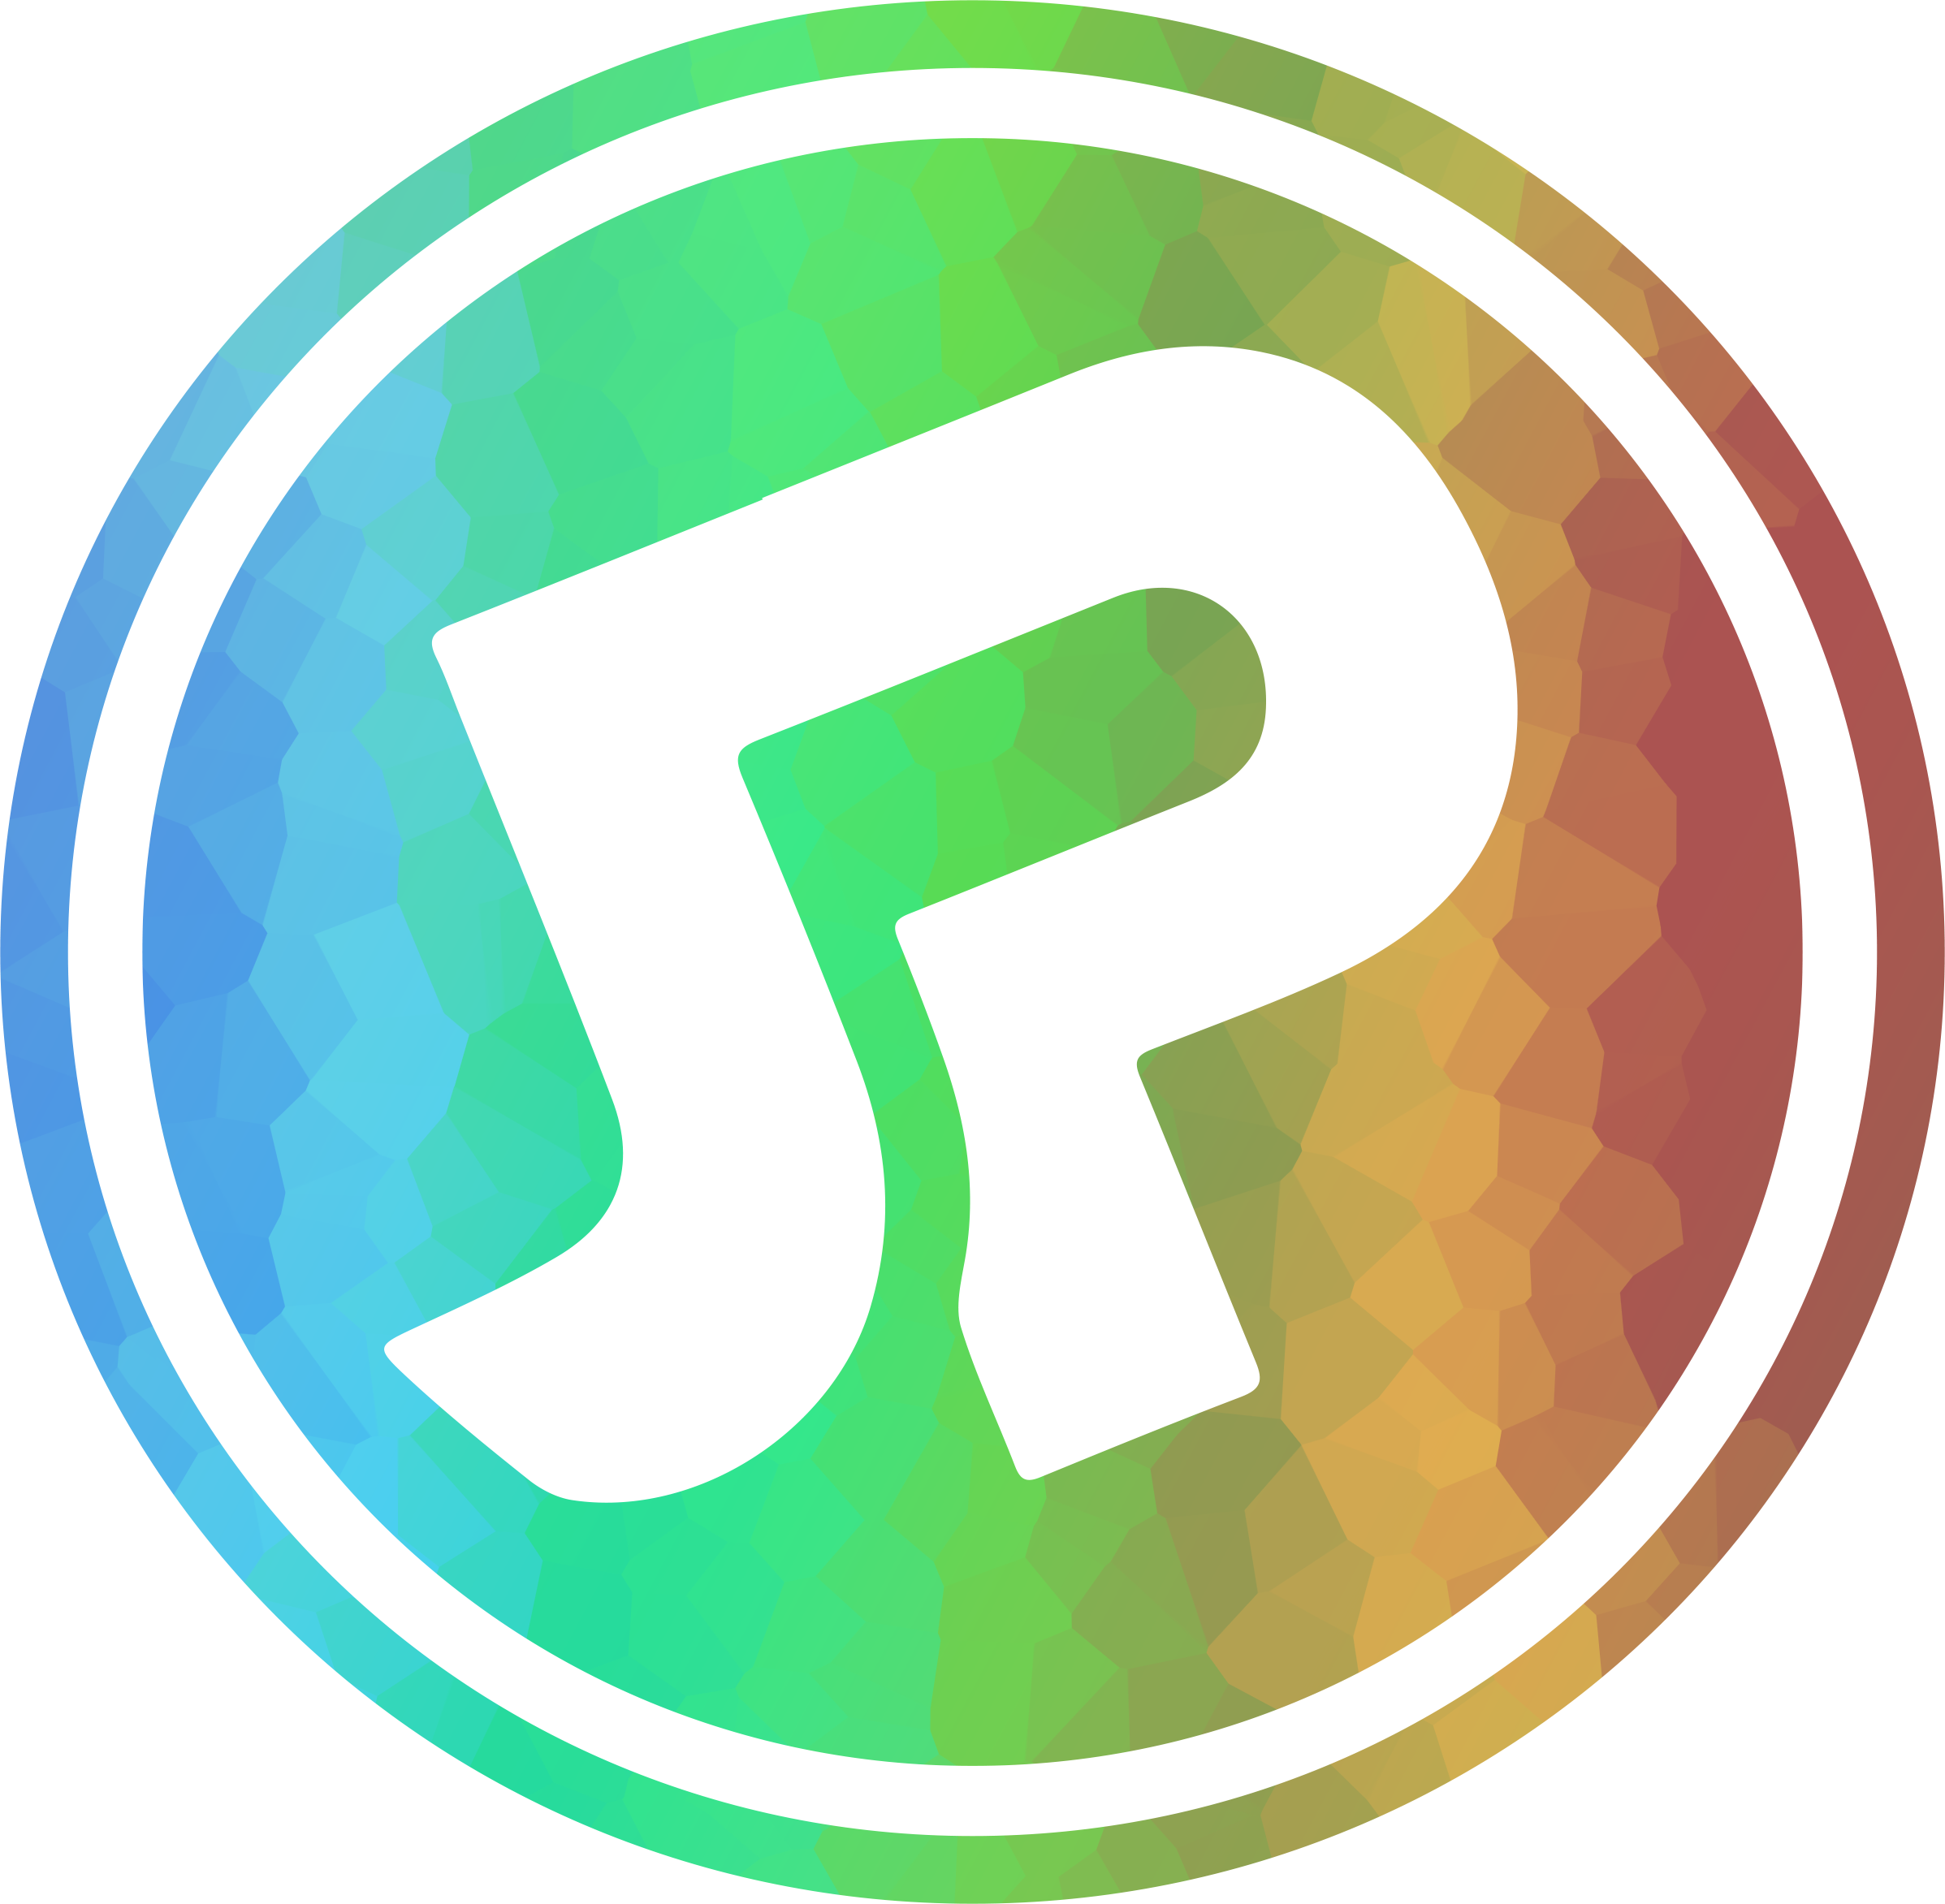 Joe Peterson's logo